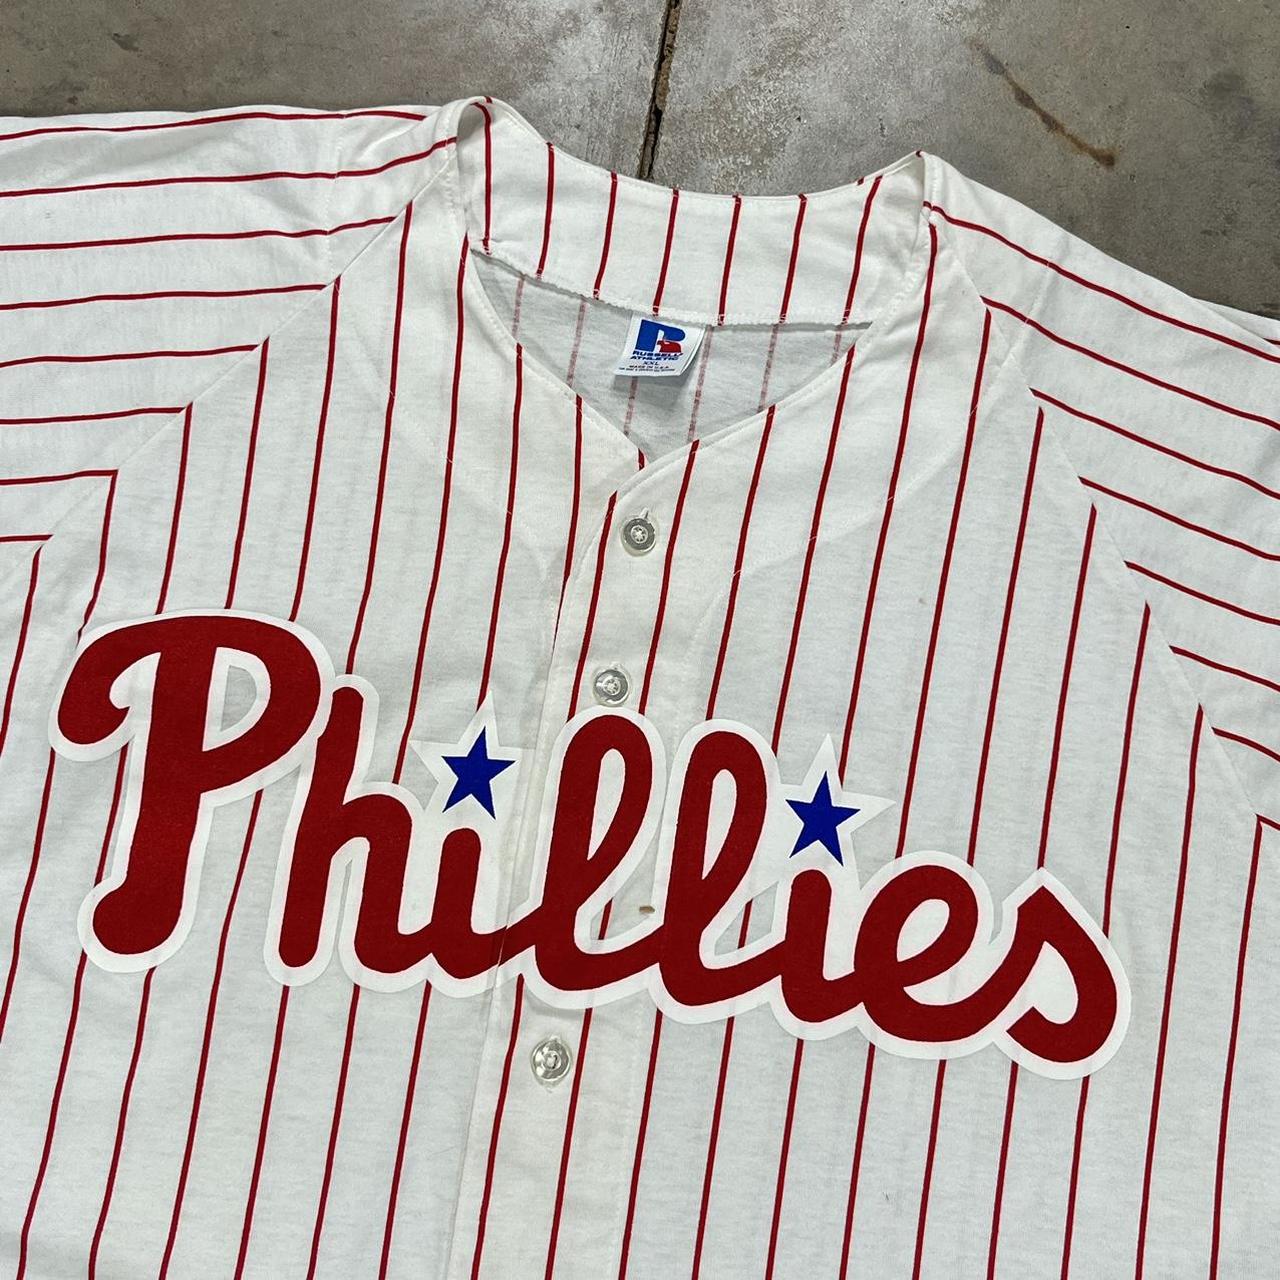 Vintage 80s sports jersey Phillies jersey women's - Depop